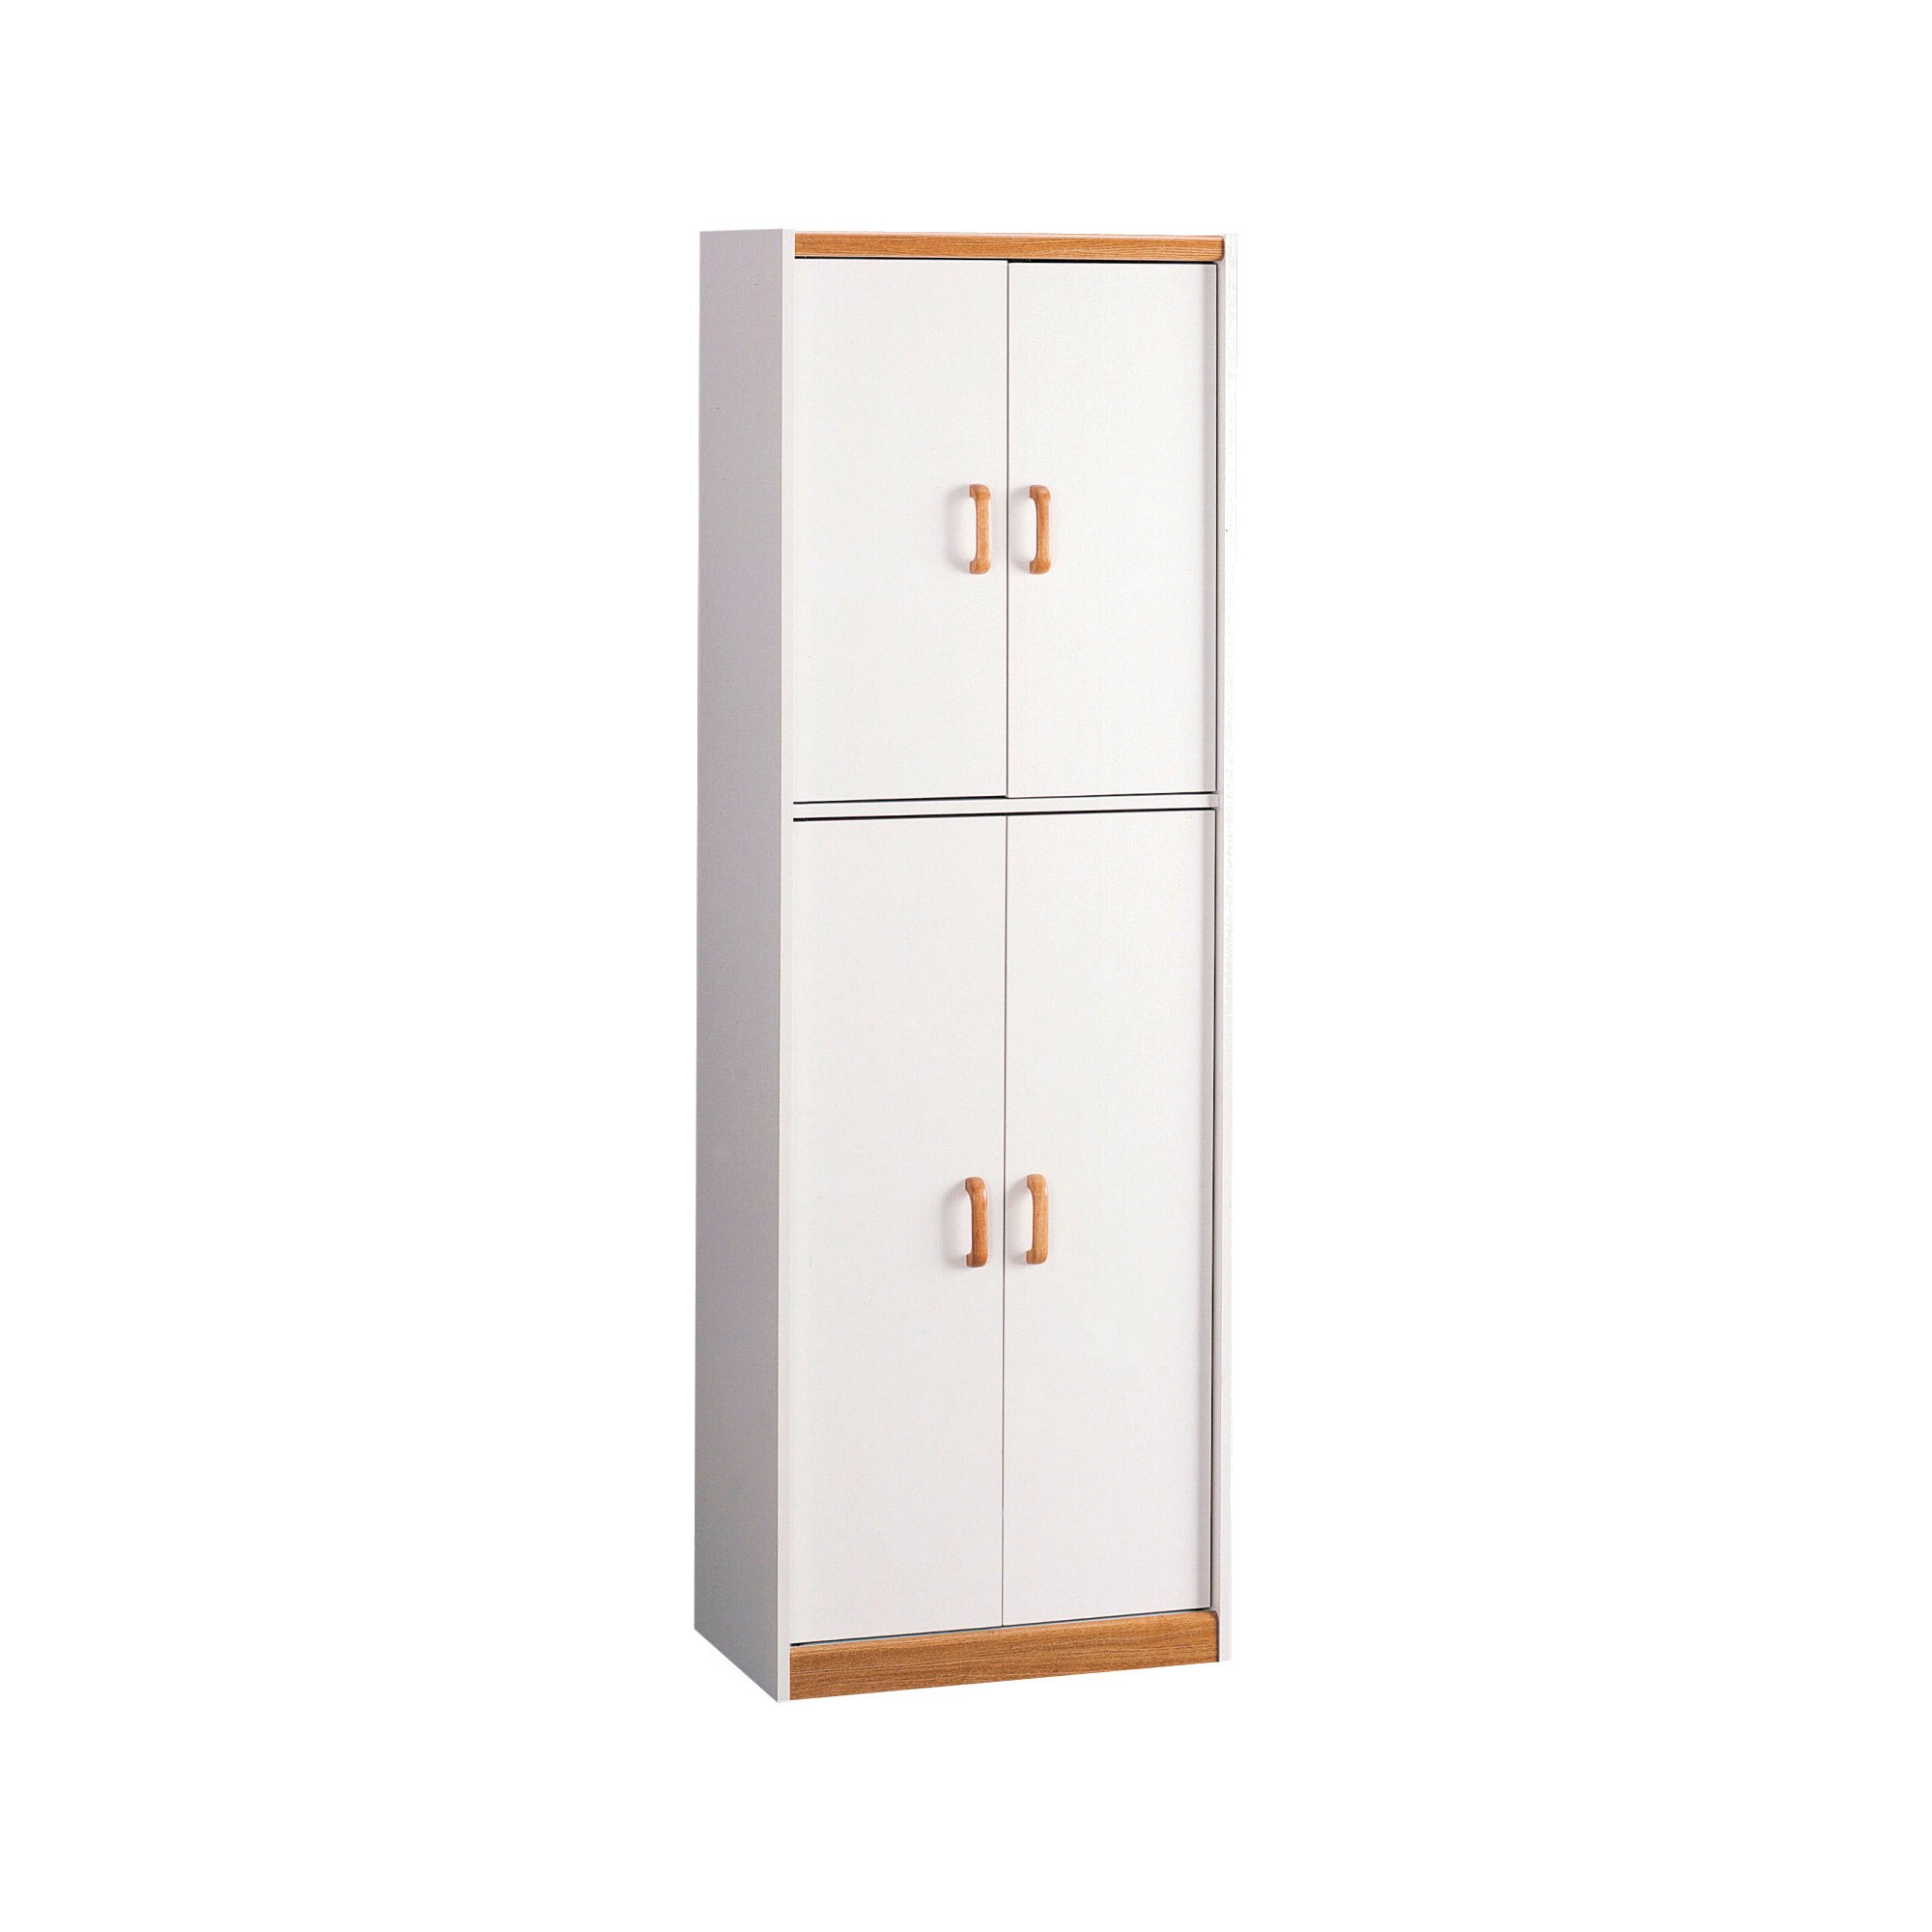 'Daywood 72'' Kitchen Pantry Cabinet White/Light Brown - Room & Joy'